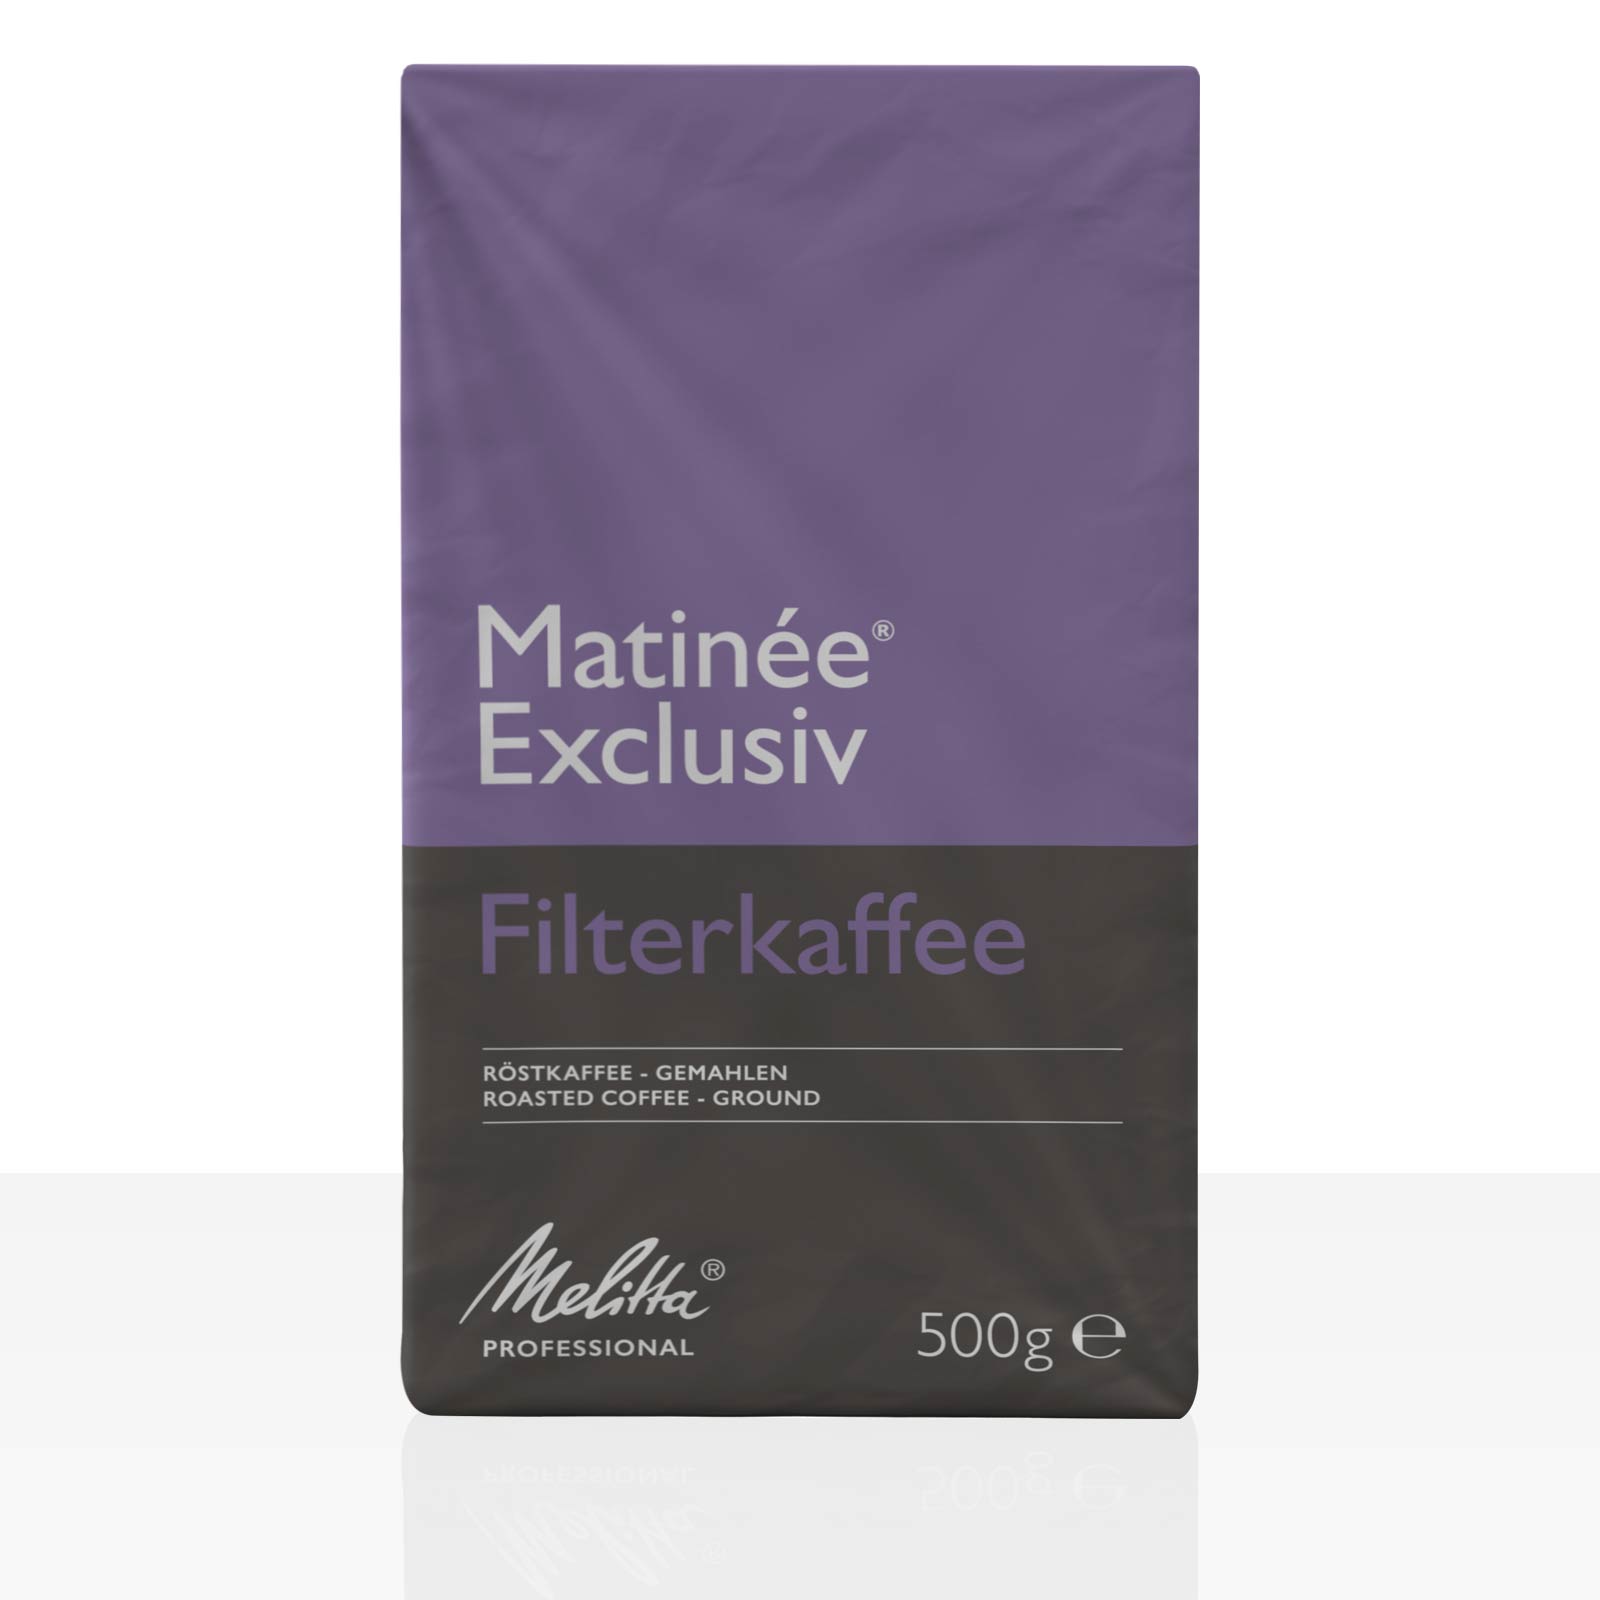 Melitta Matinee Exclusiv - 500g Kaffee gemahlen, Filterkaffee 